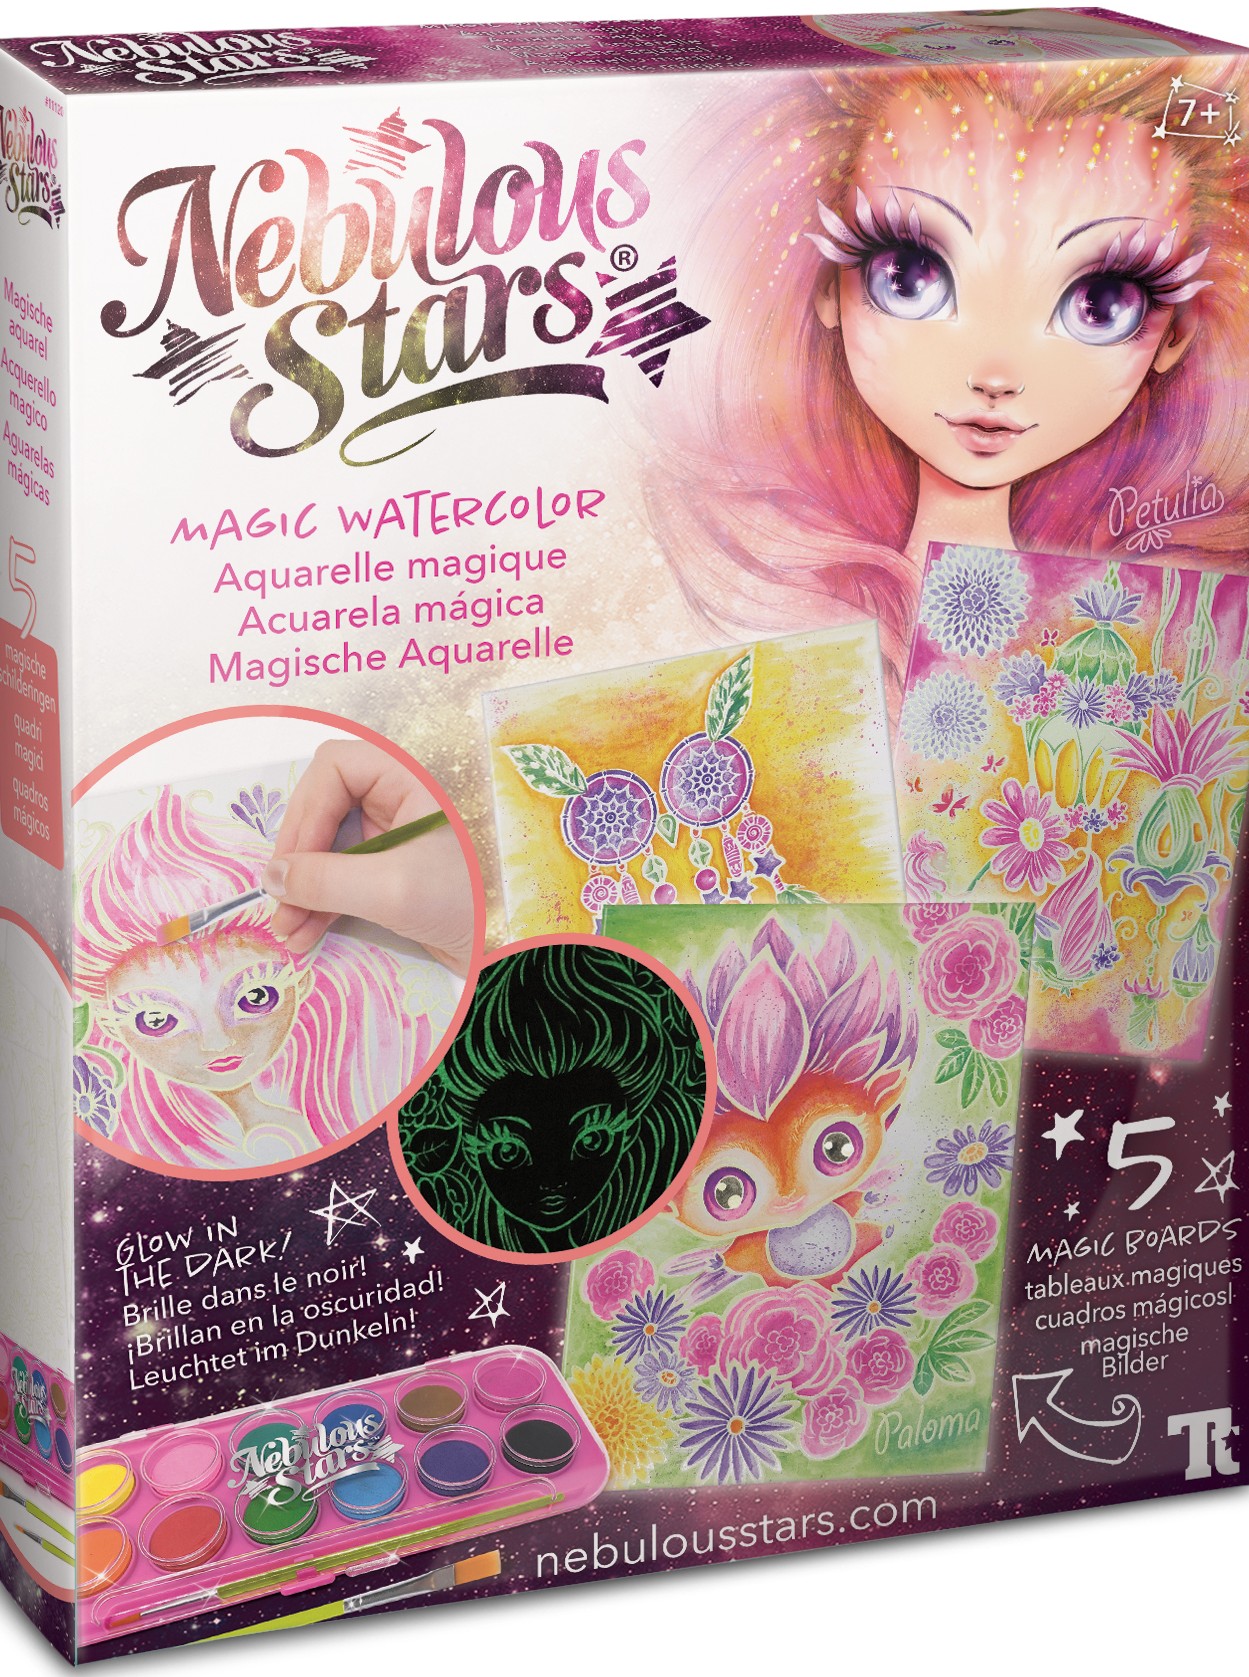 Boîte du jeu Nebulous Stars - Aquarelle Magique Petulia